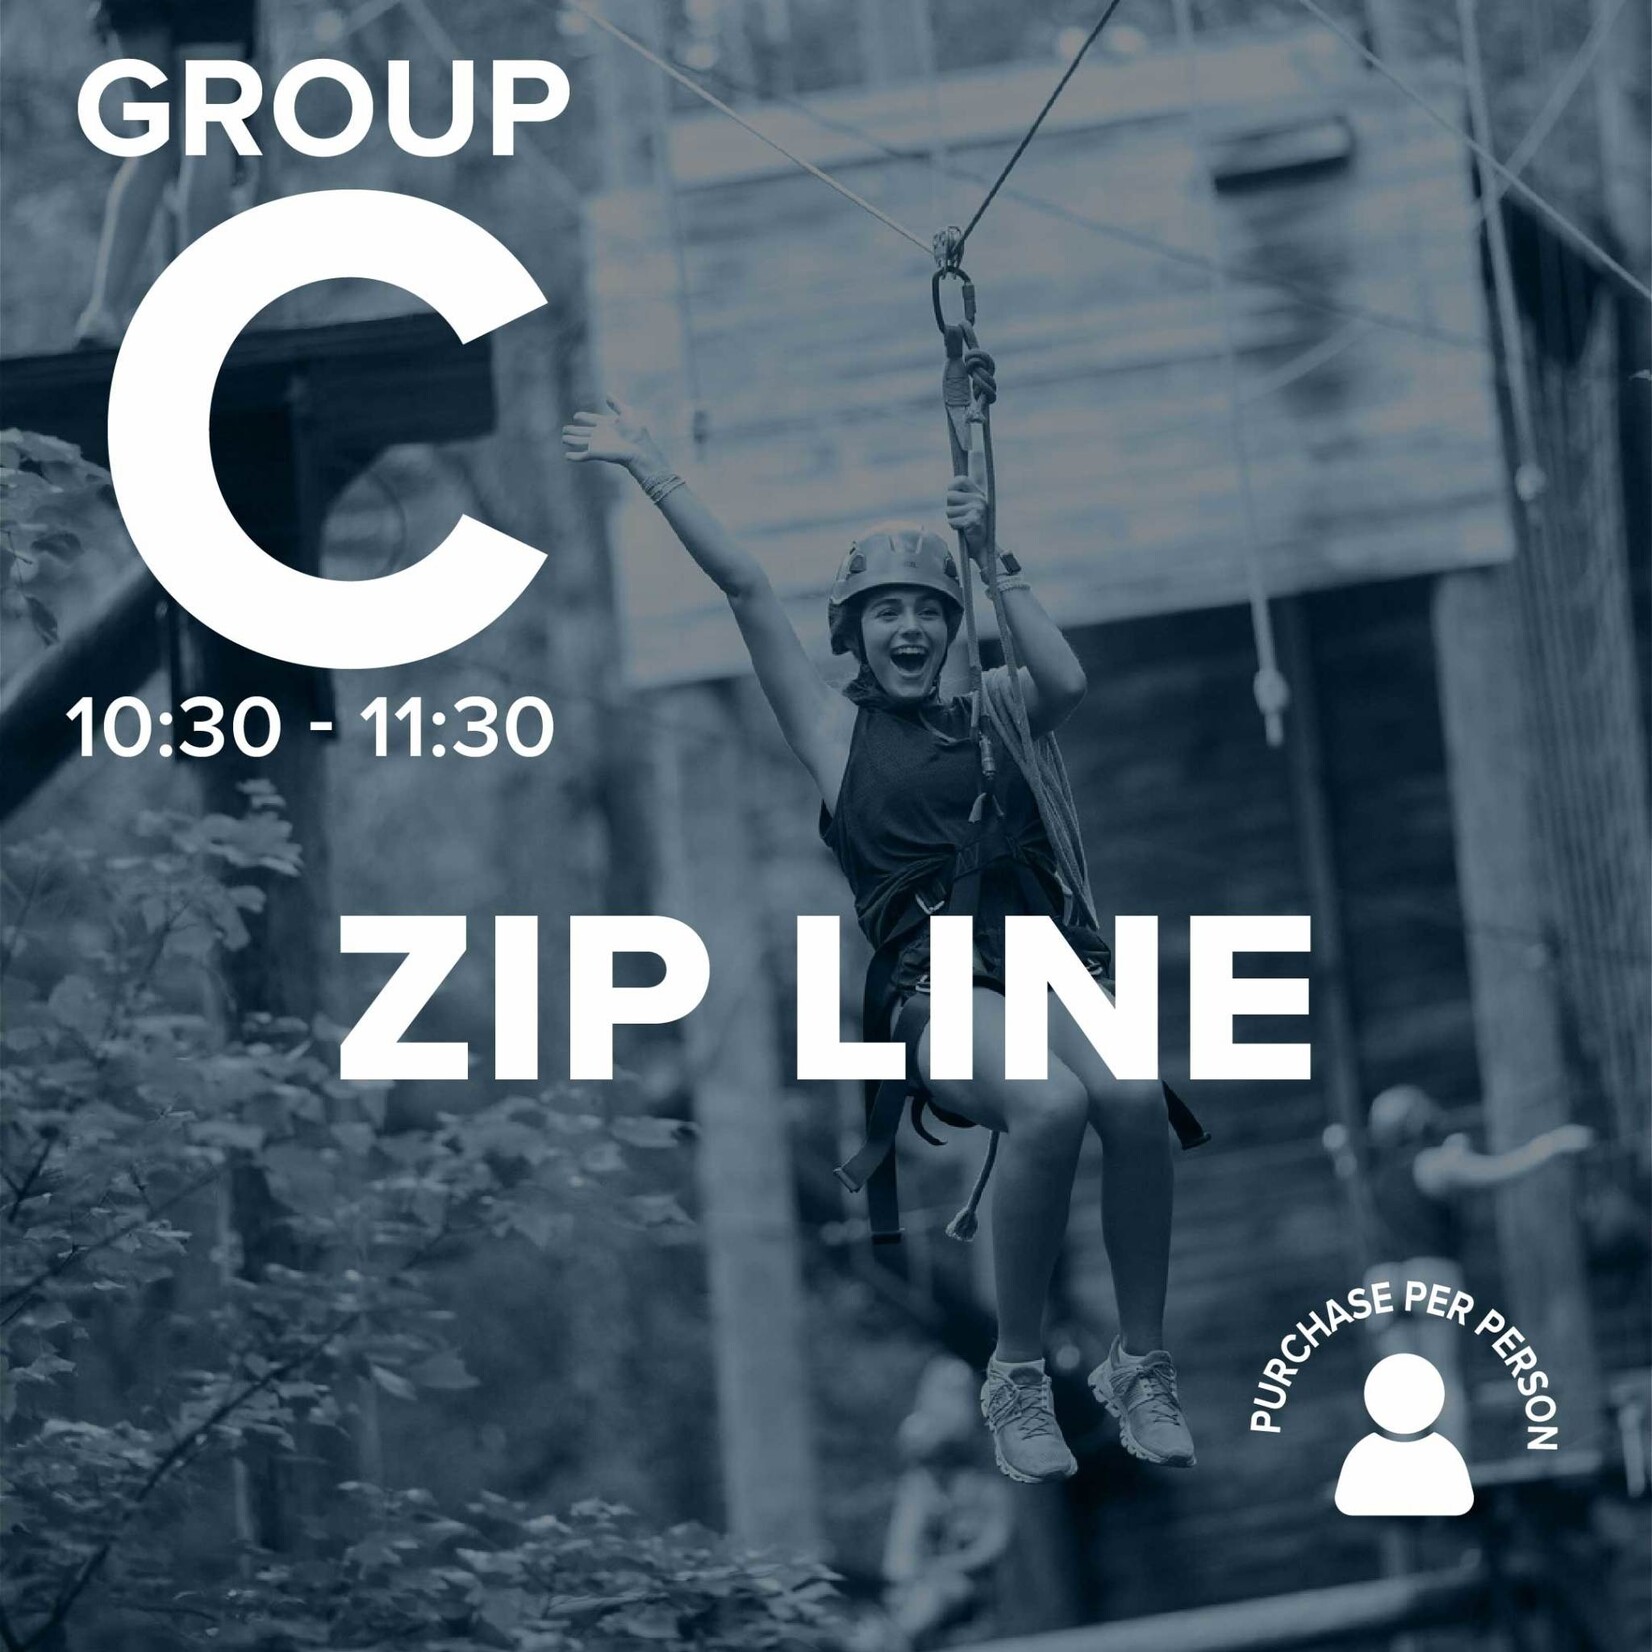 2024 Student Life Youth Camp 1 May 27-May 31 Zipline SLY1 2024 GROUP C